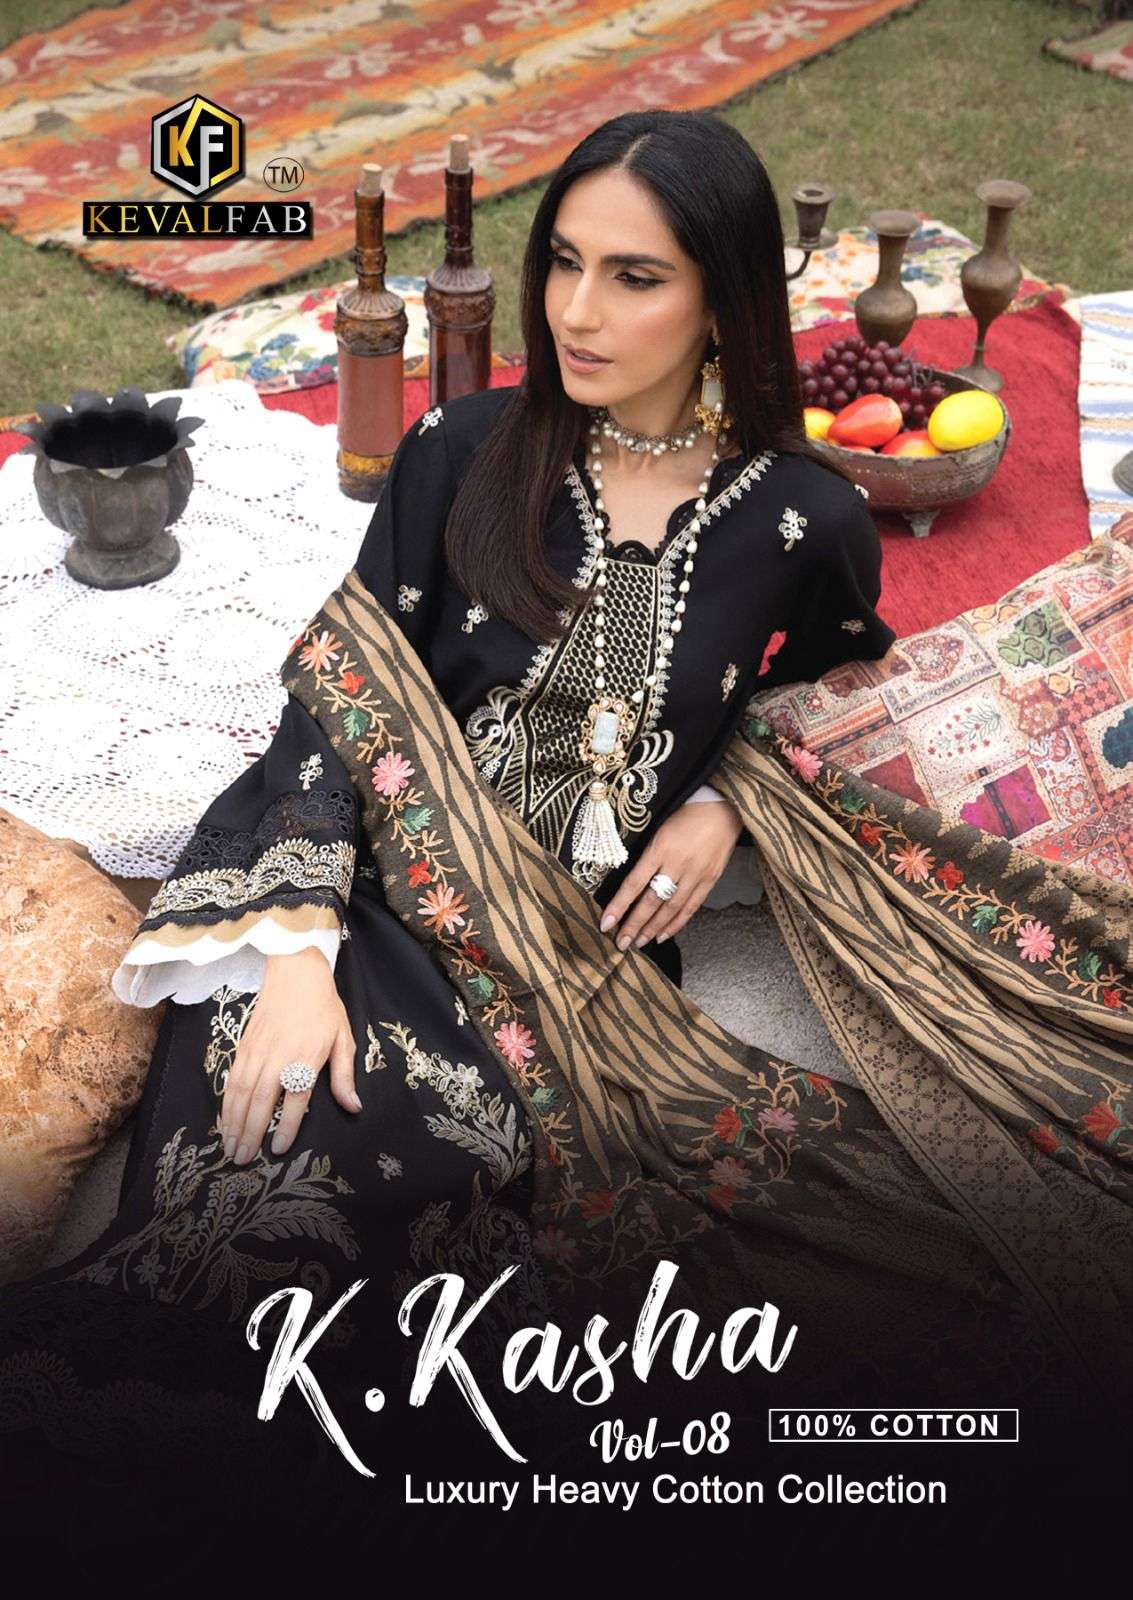 K.KASHA VOL-8 BY KEVAL FAB 8001 TO 8006 SERIES COTTON PAKISTANI DRESSES